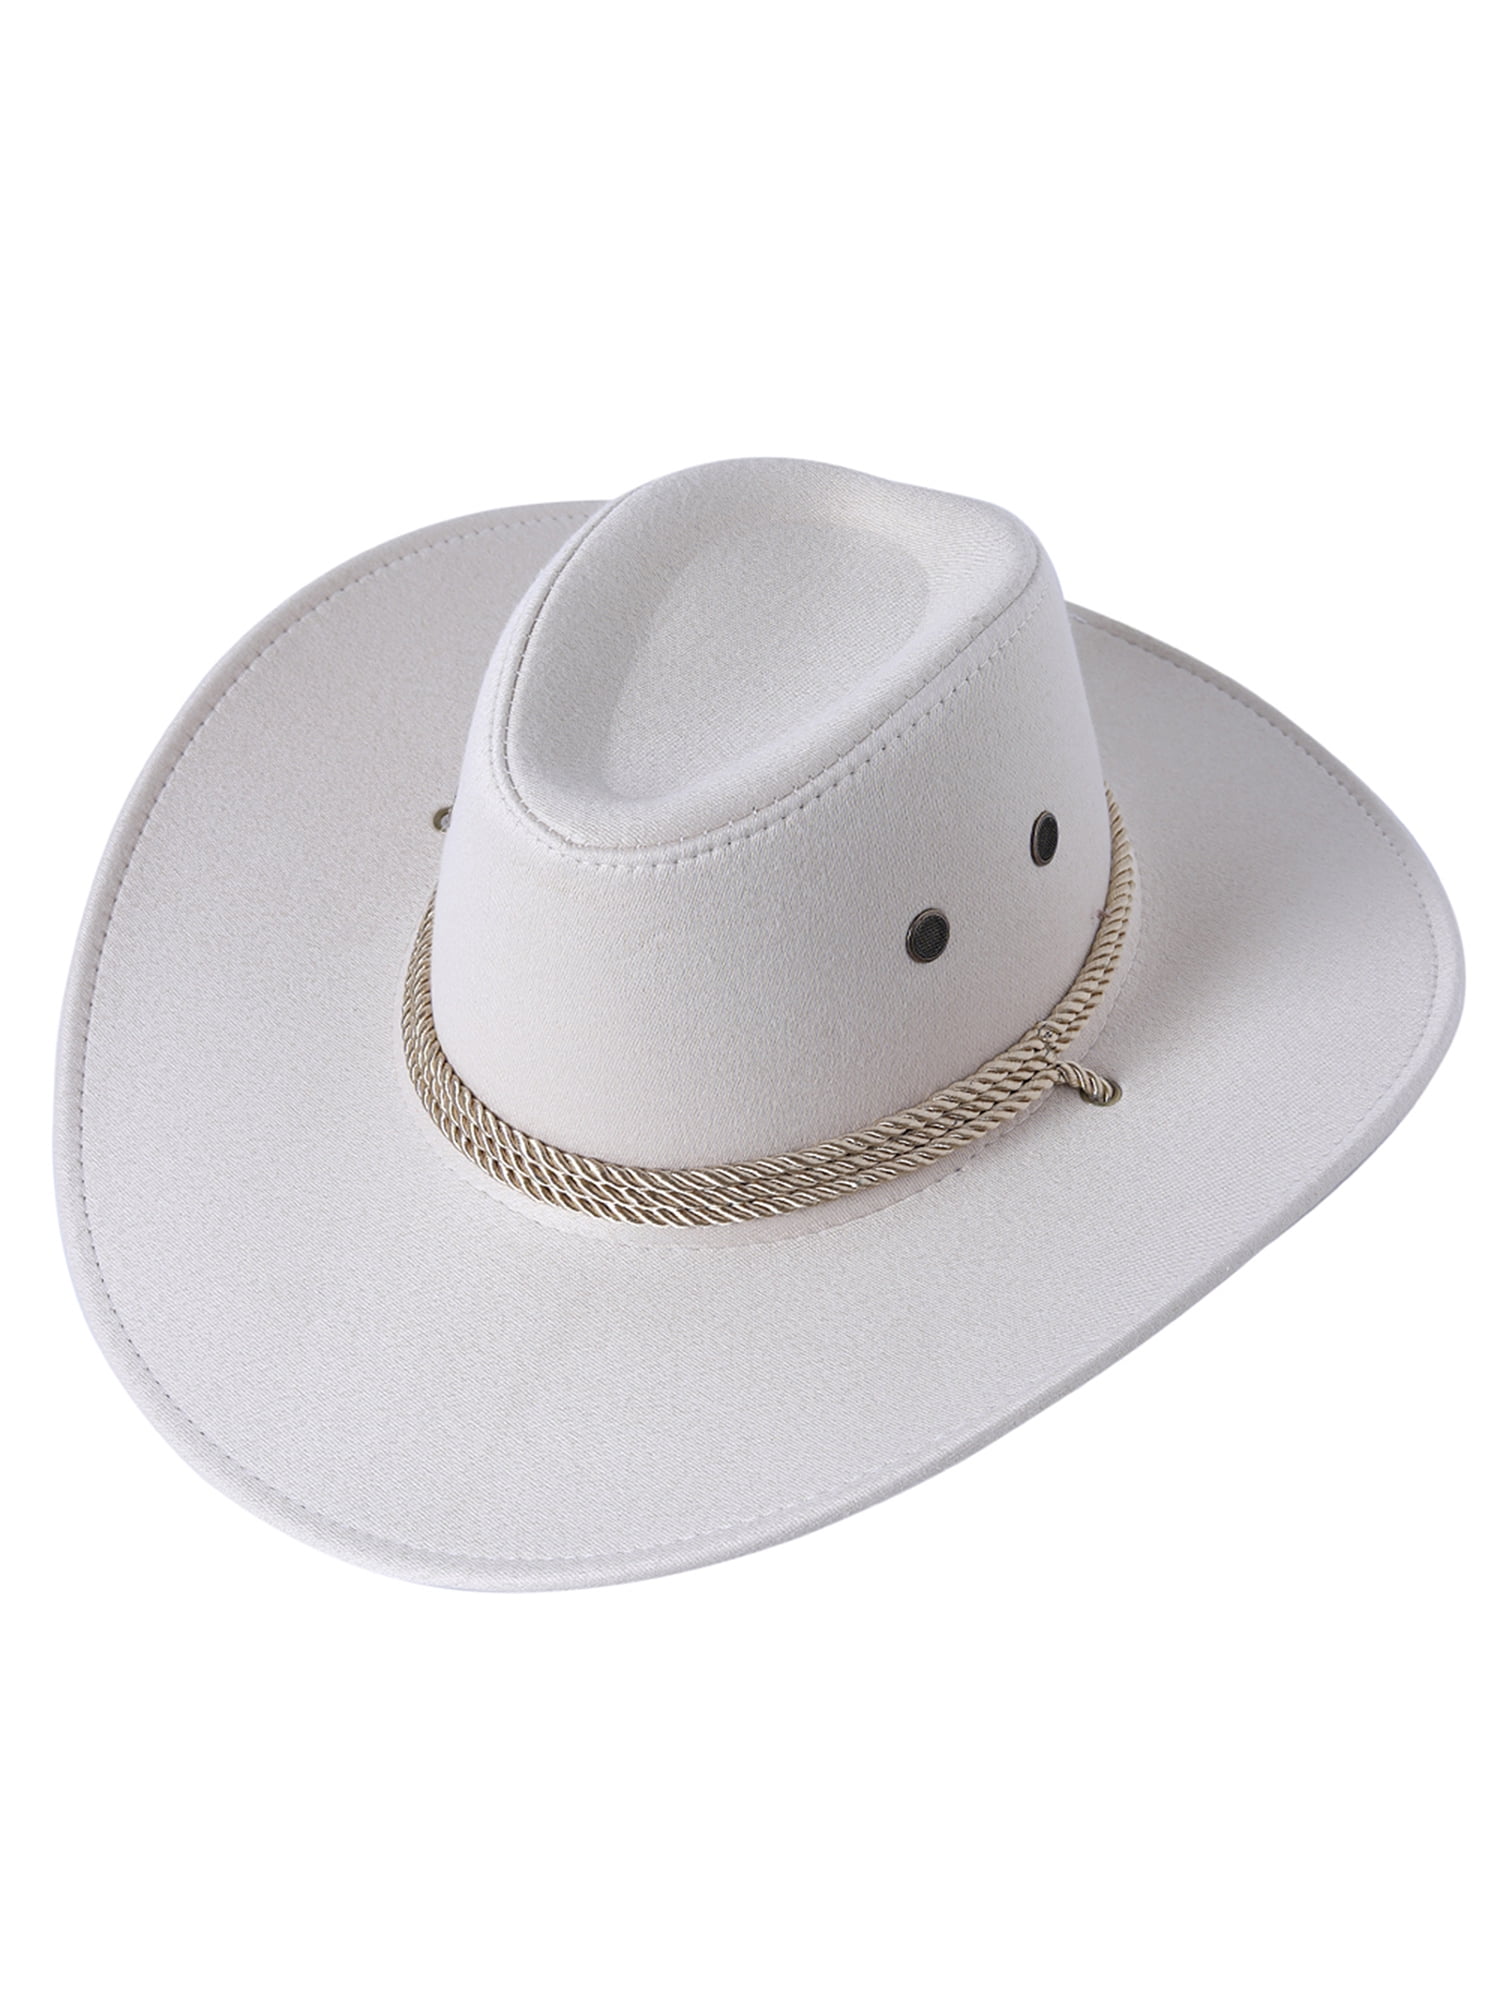 Hat Tape Roll 60 Inch (5 Feet) Size Reducer Foam Filler Cap Sizing Strip  Insert for Fedora Baseball Caps Panama Straw Cowboy Western Hard Hats  Bowlers